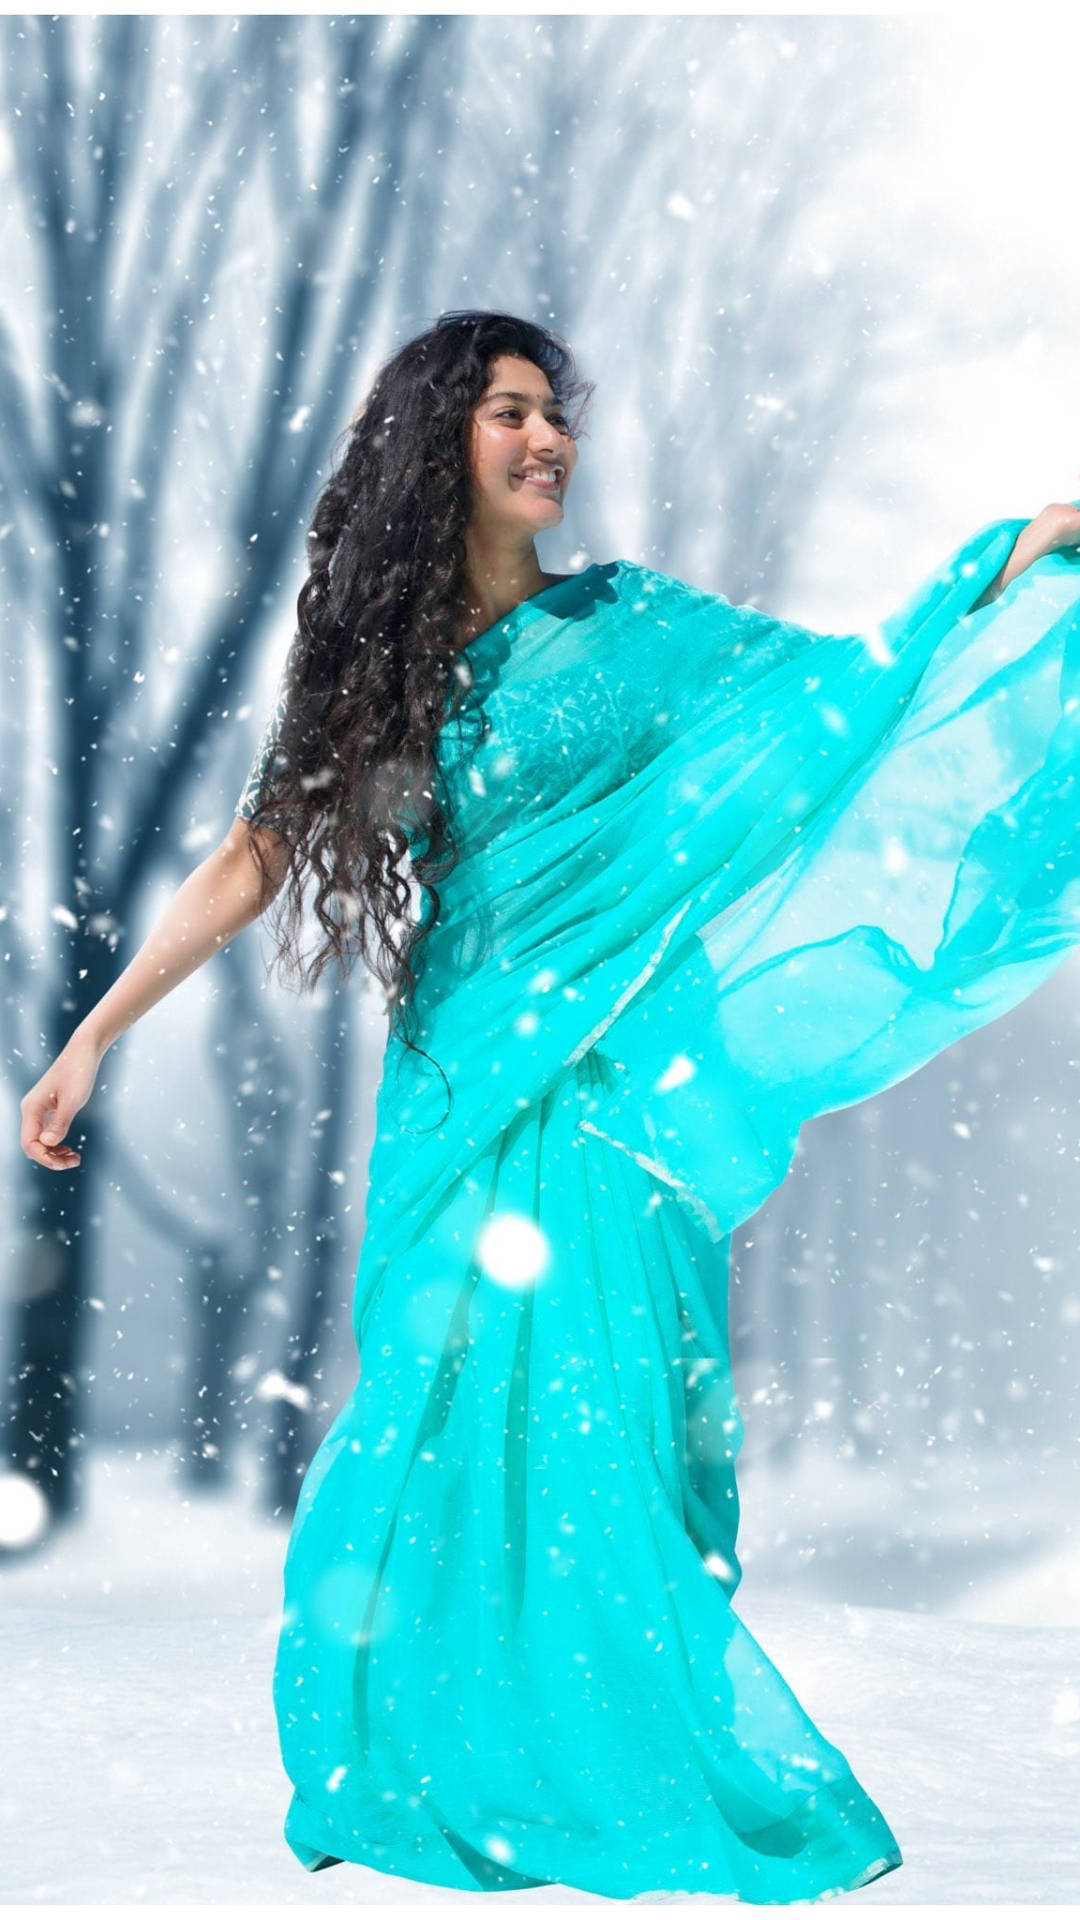 Sai Pallavi Dancing In Snow Background